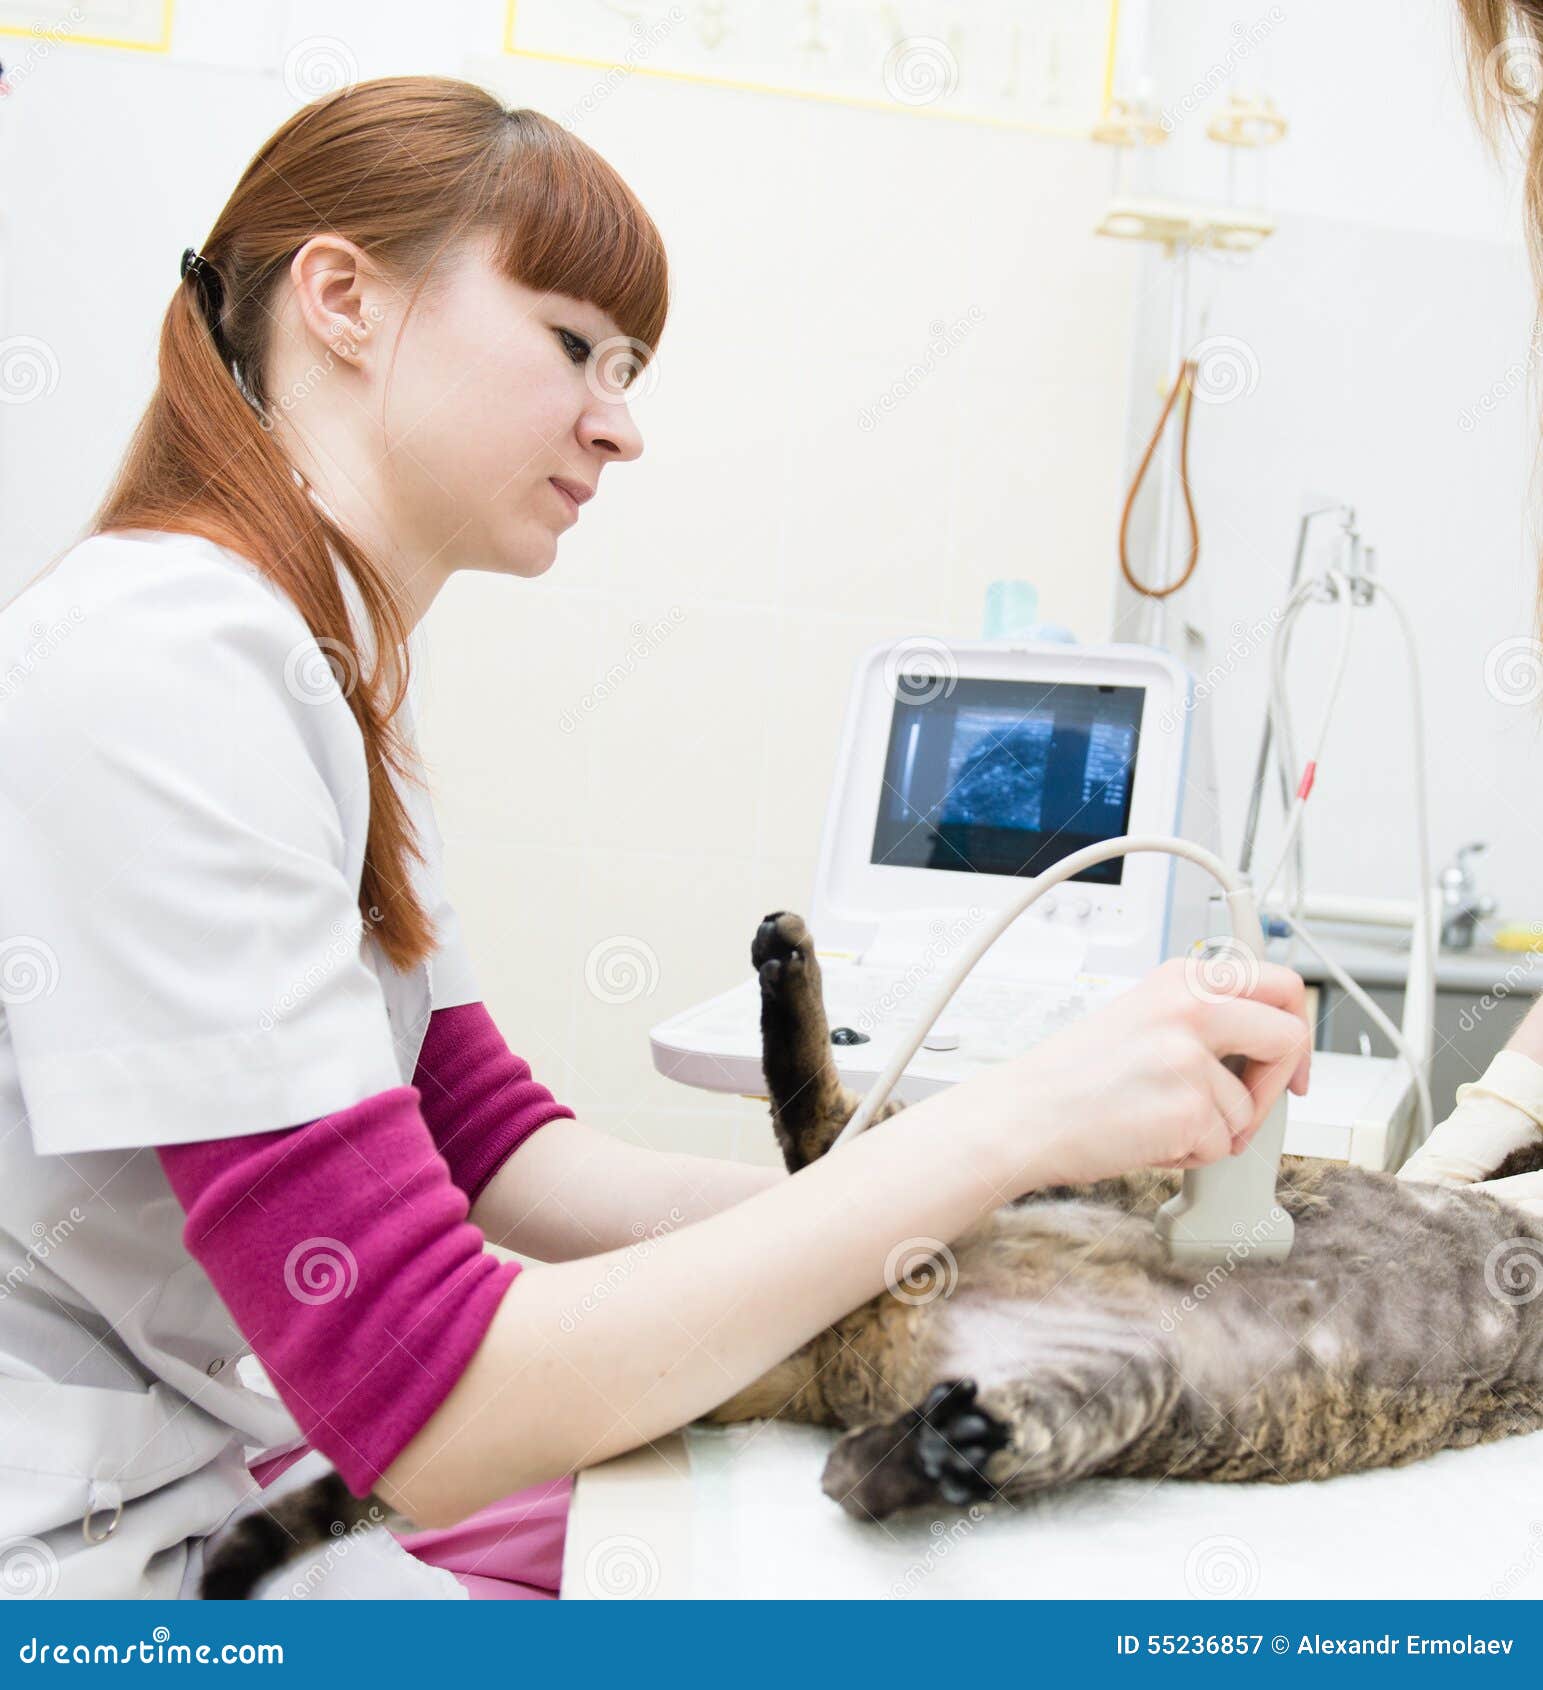 veterinarian performed an ultrasound examination a cat